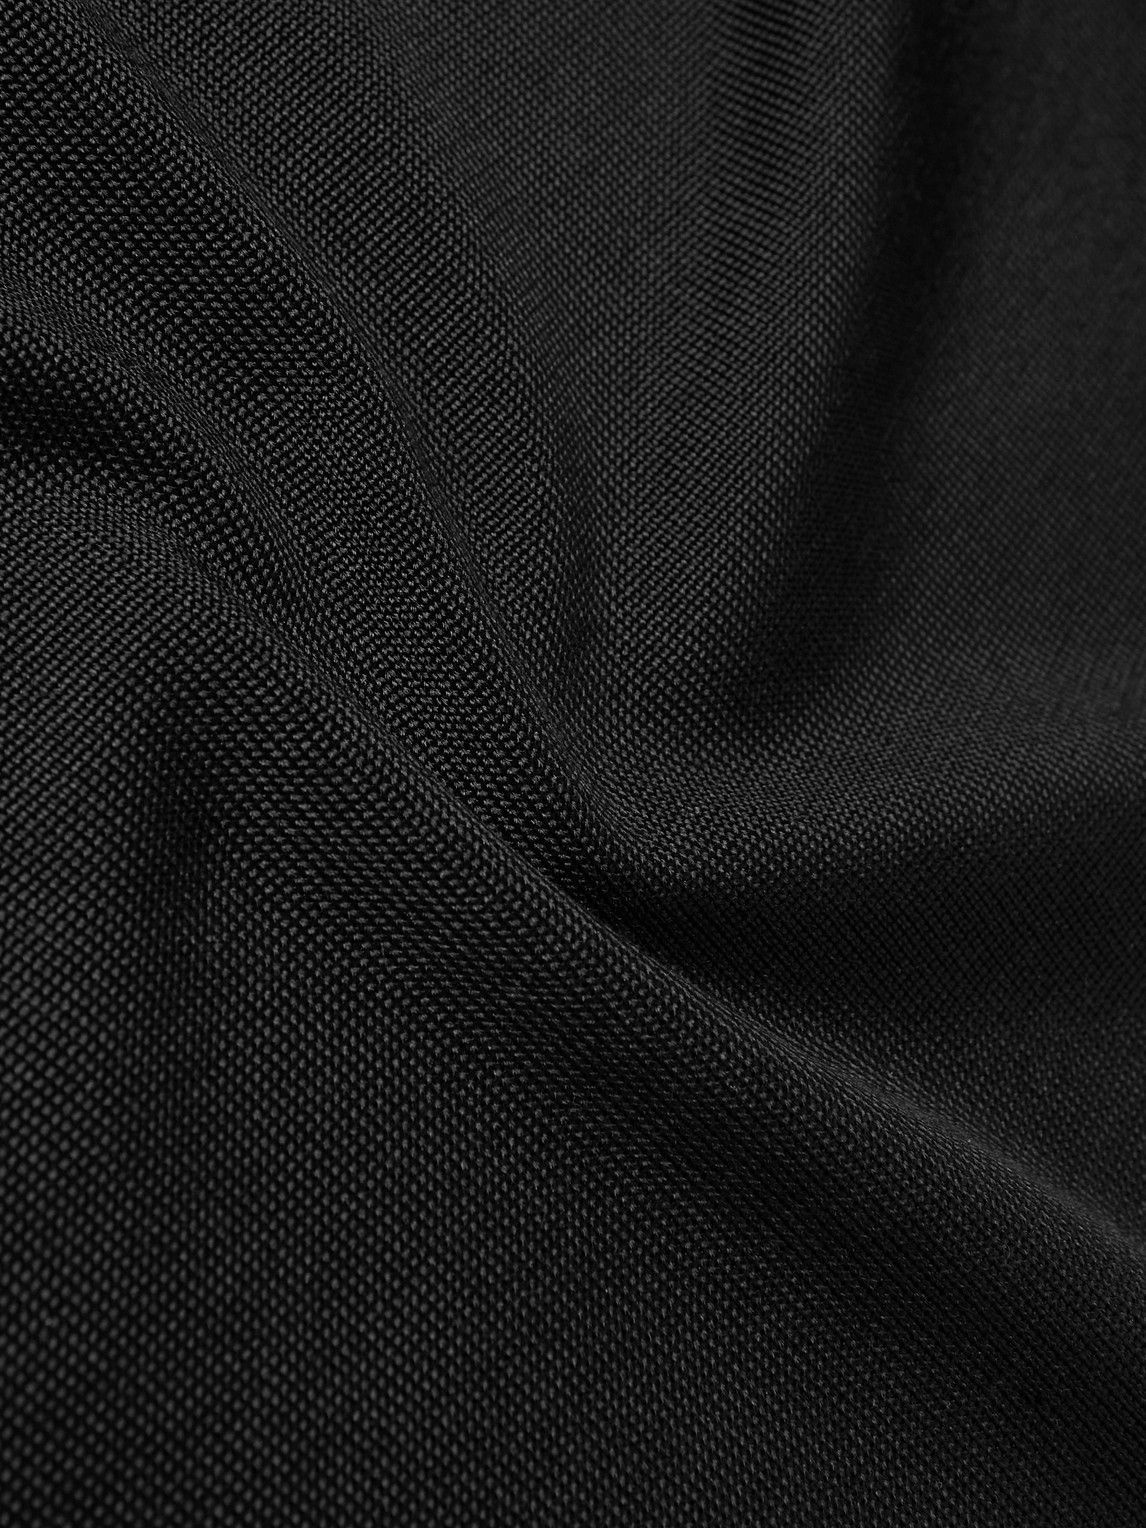 TOM FORD - Silk and Merino Wool-Blend Mock-Neck Sweater - Black TOM FORD